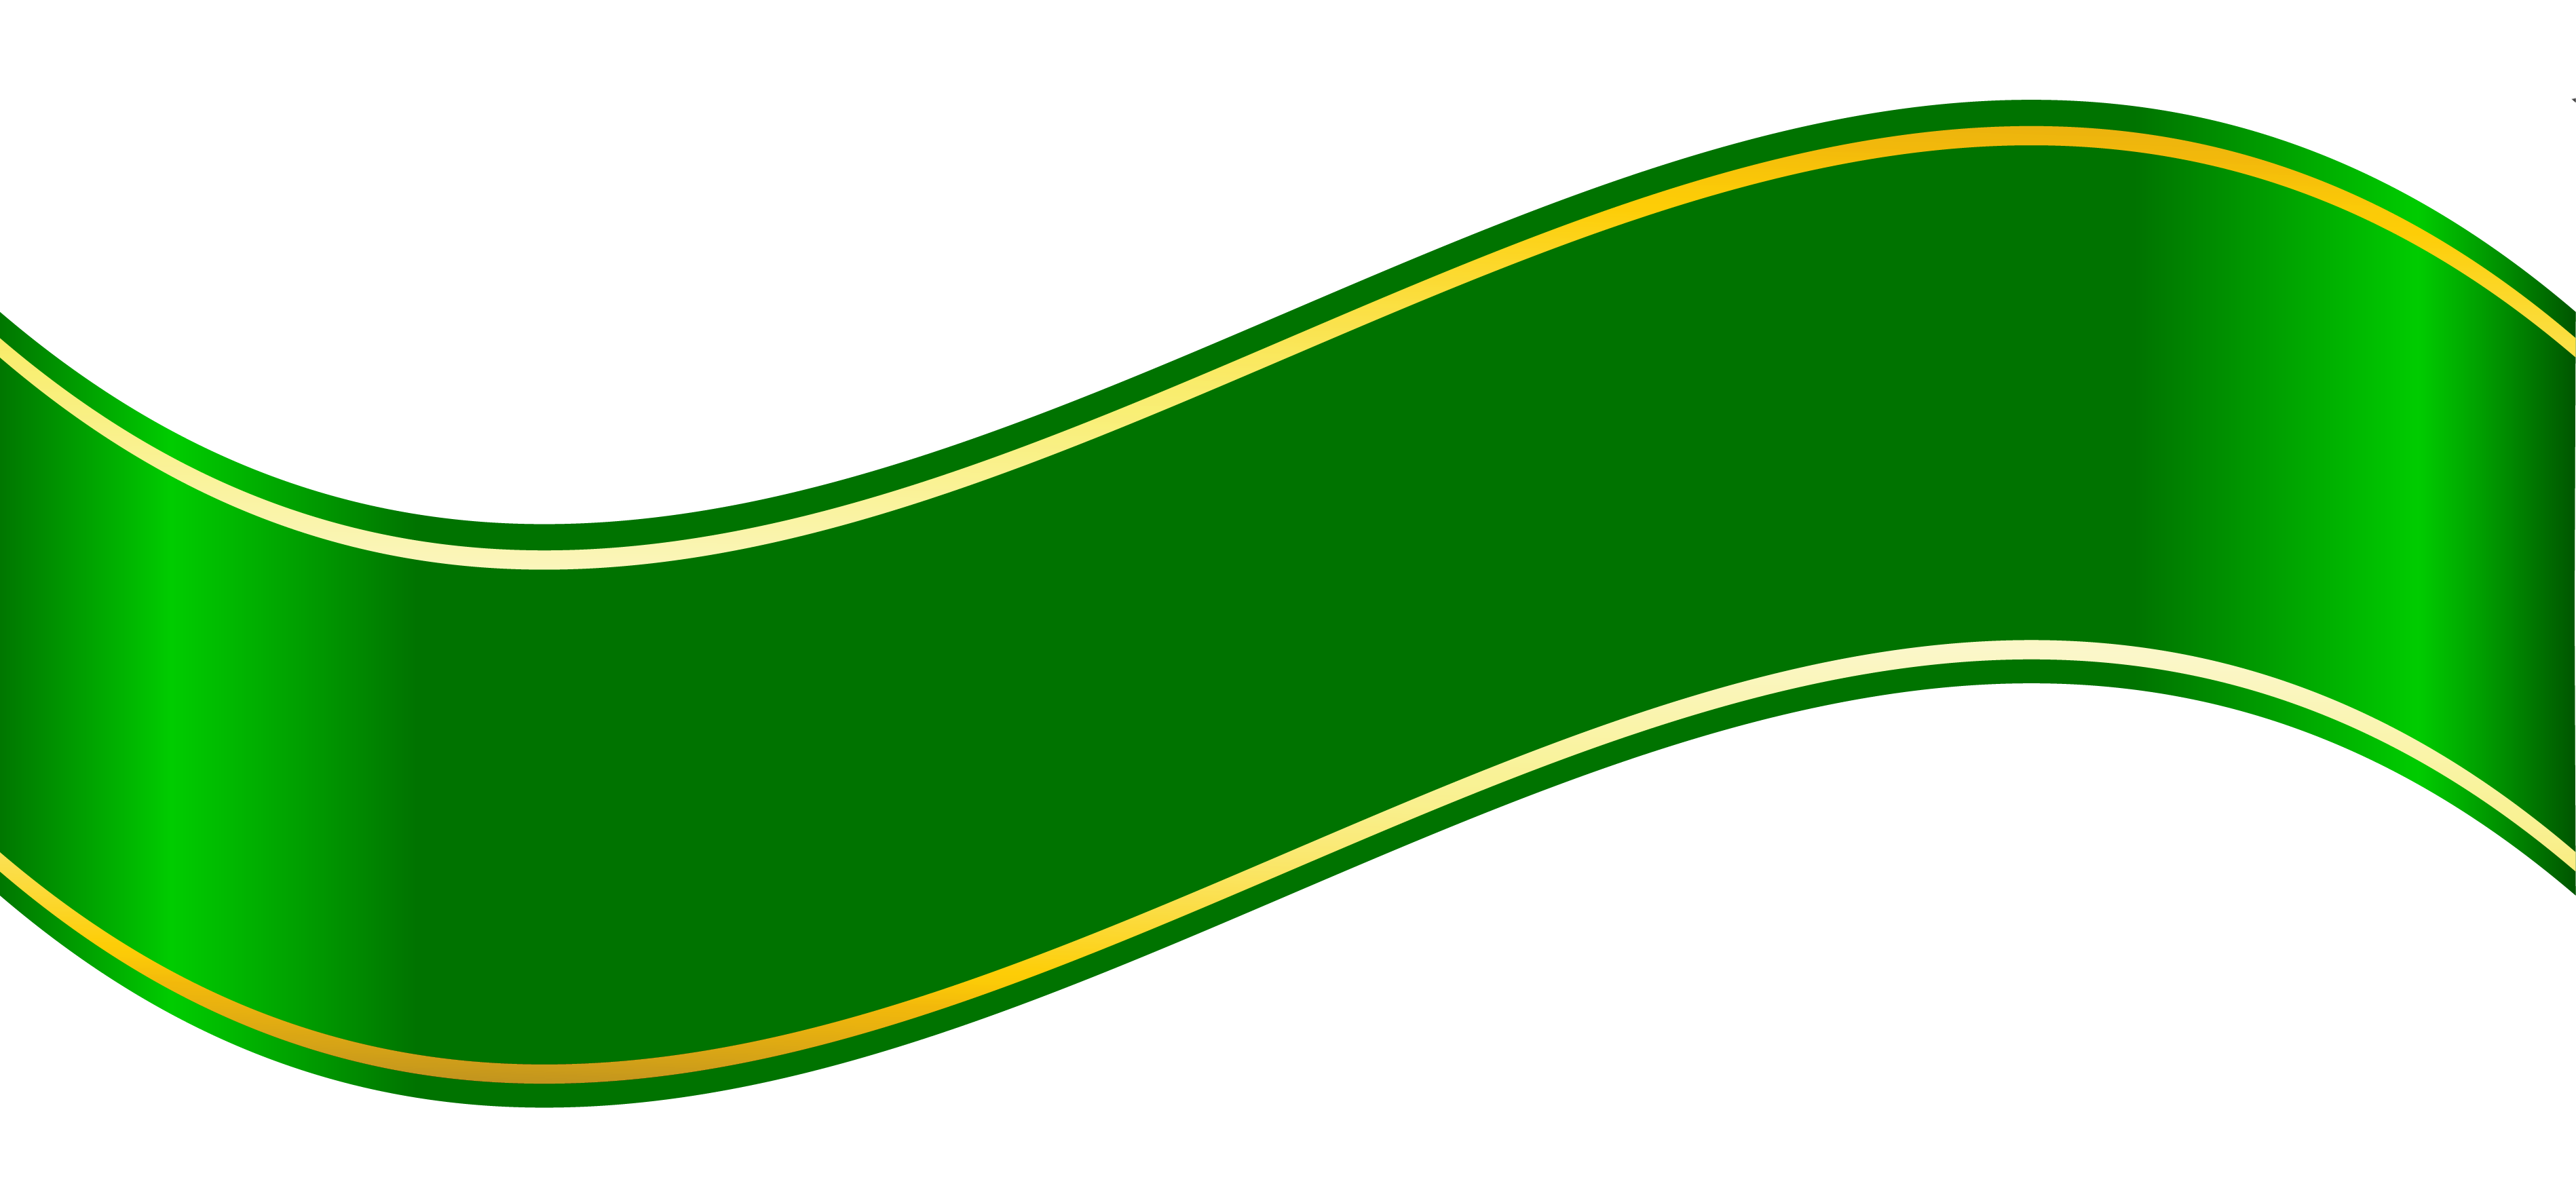 Yeşil şerit PNG şeffaf